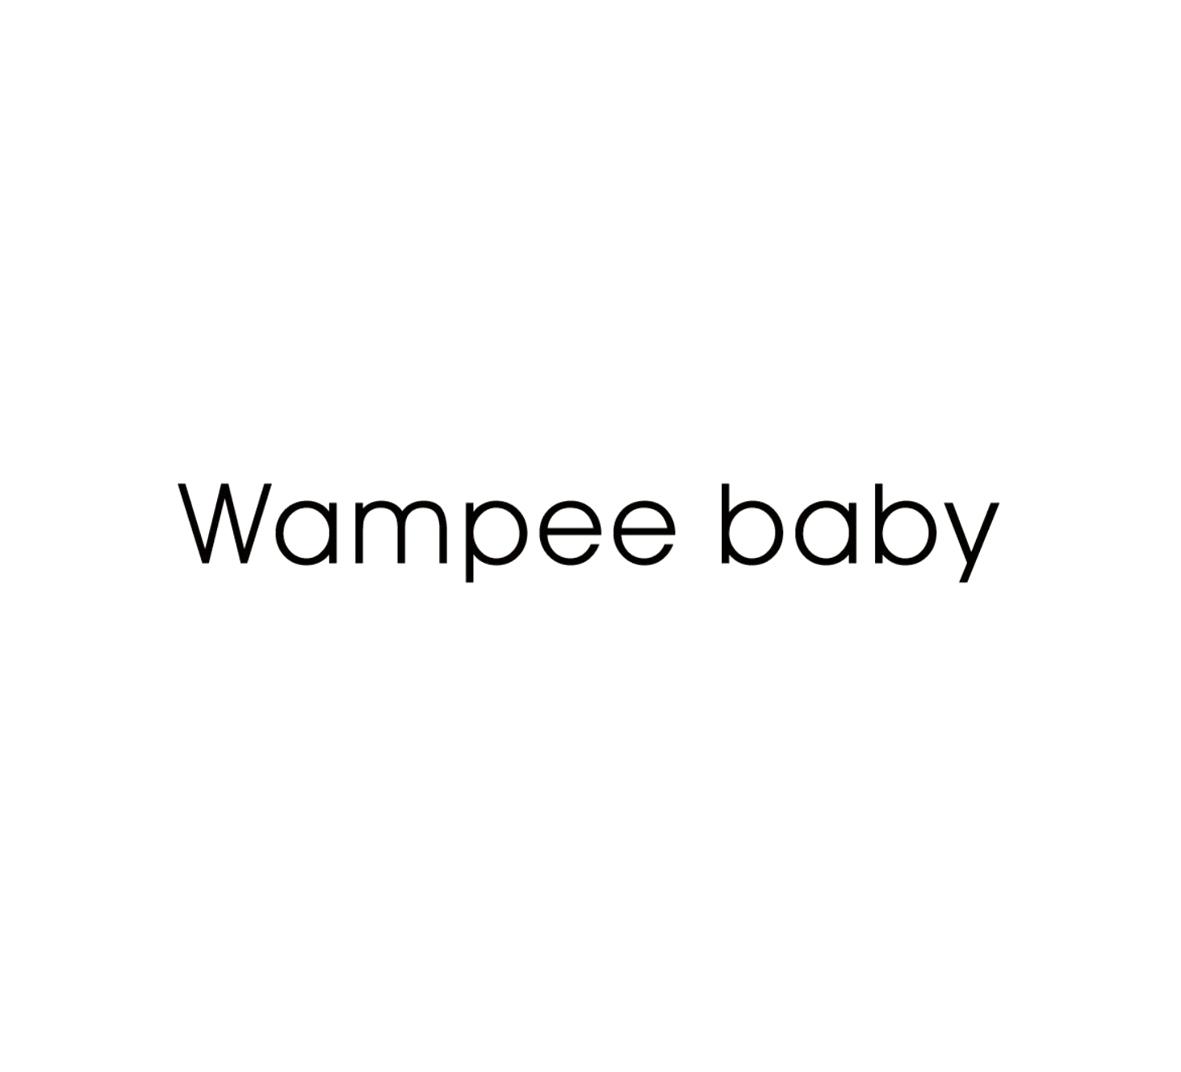 20类-家具WAMPEE BABY商标转让